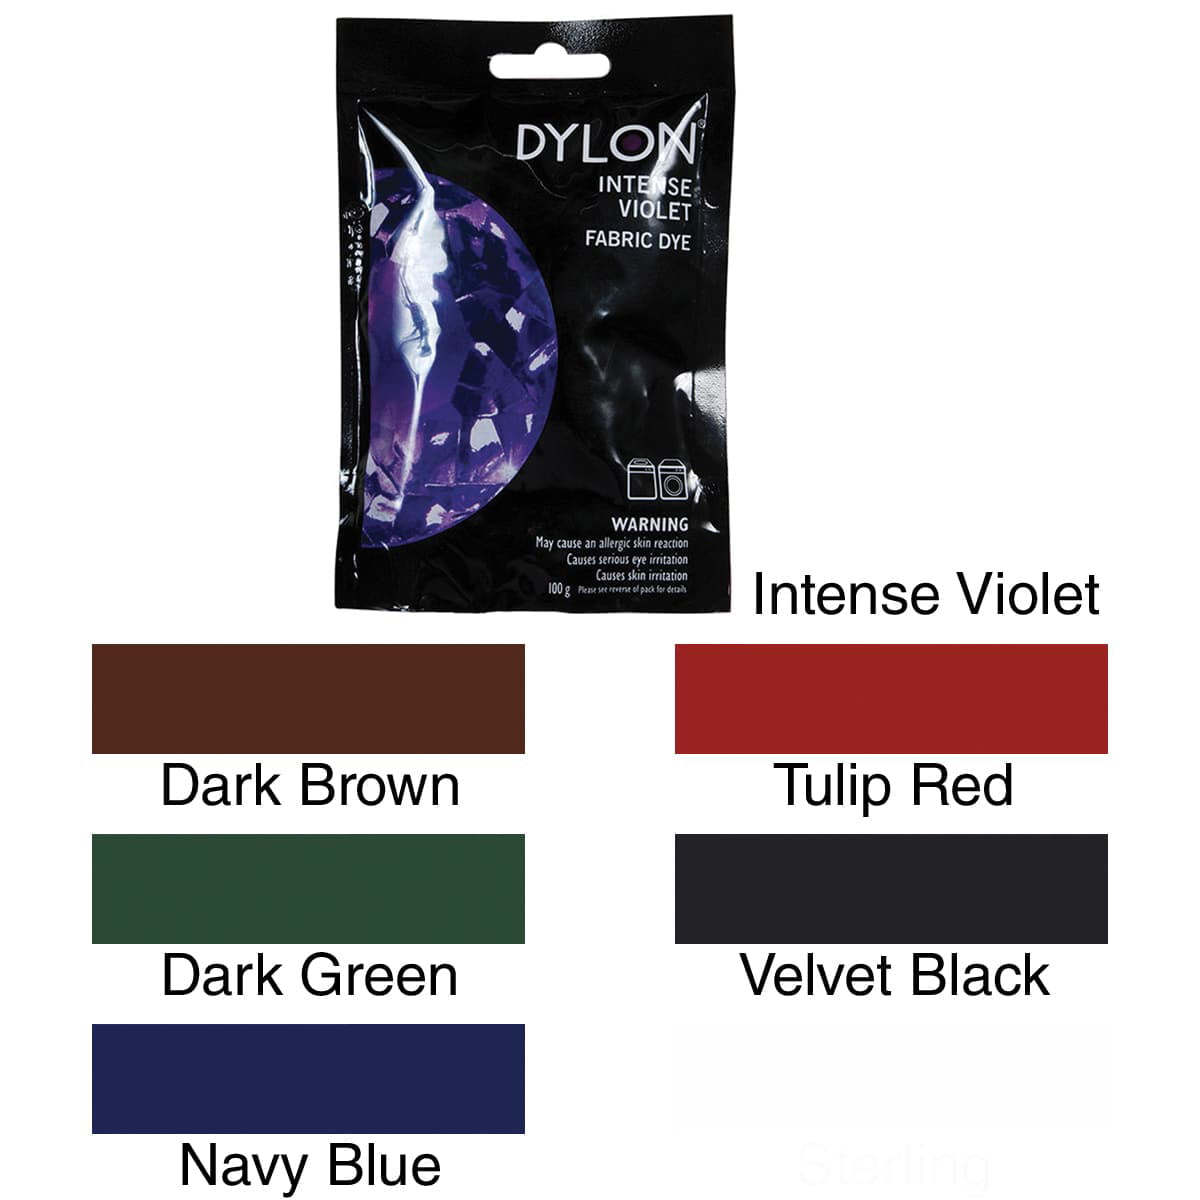 Buy Dylon Fabric Dye Navy Blue online at